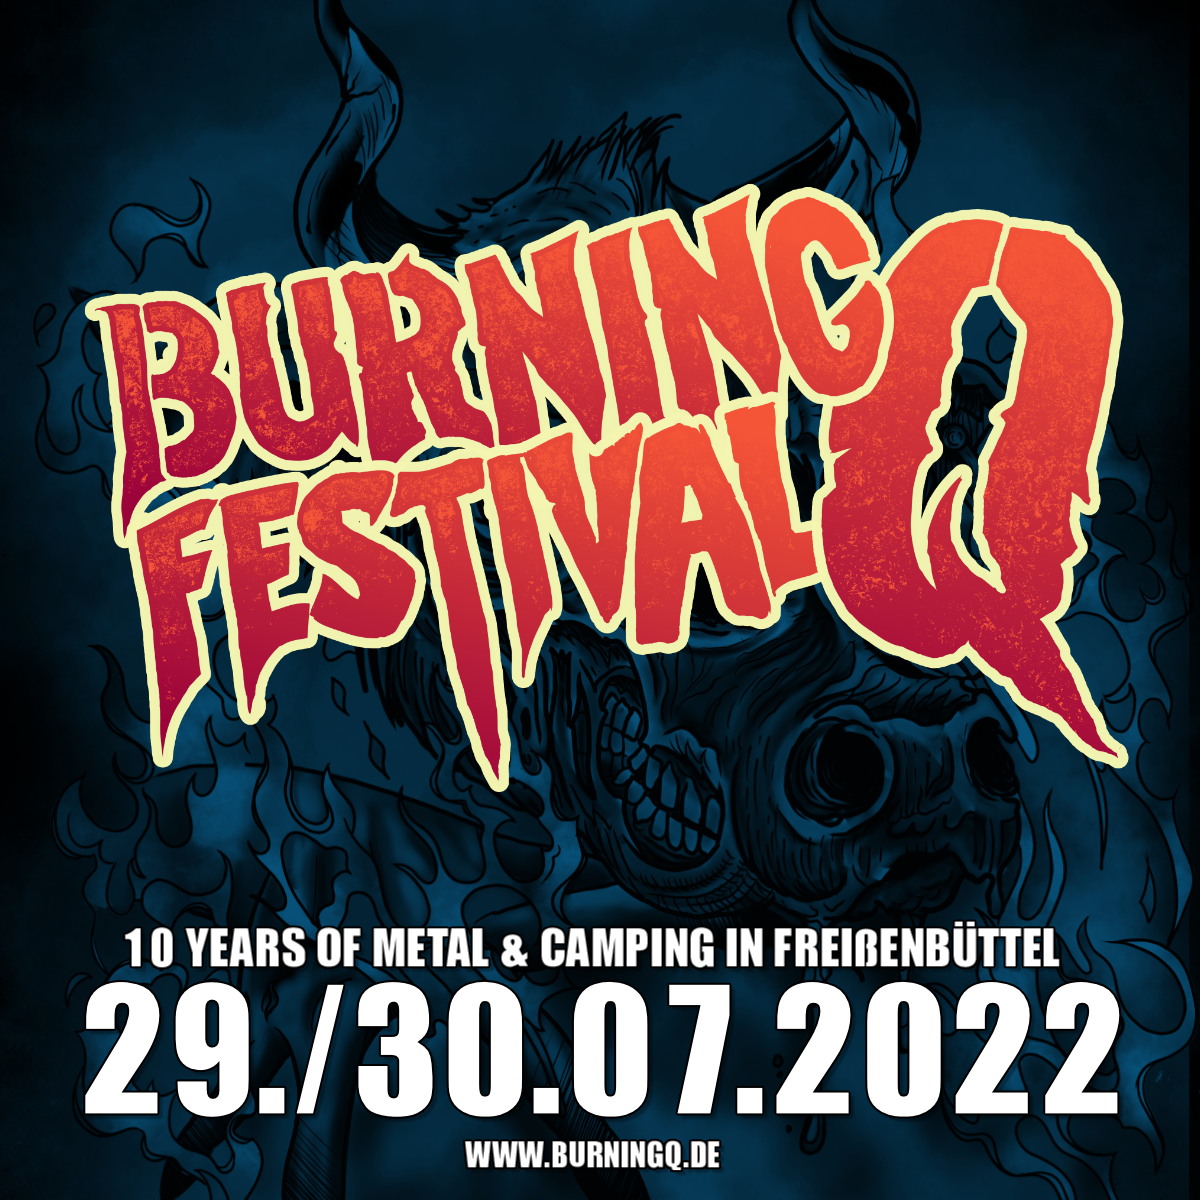 www.burningq.de